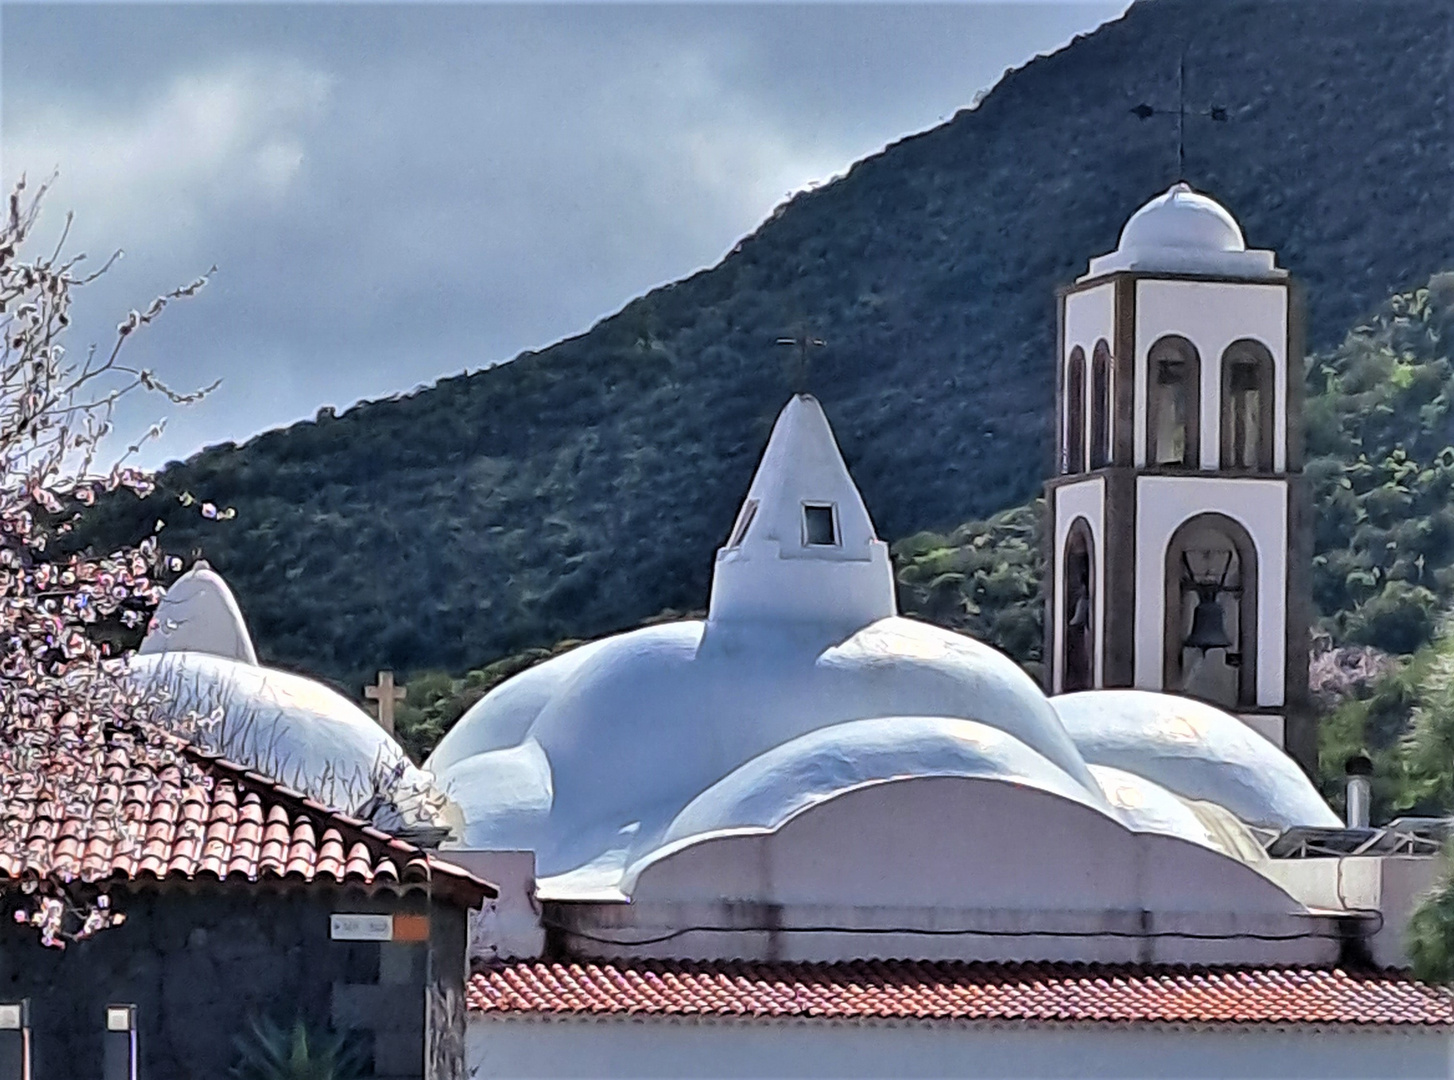 Iglesia de San Fernando Rey